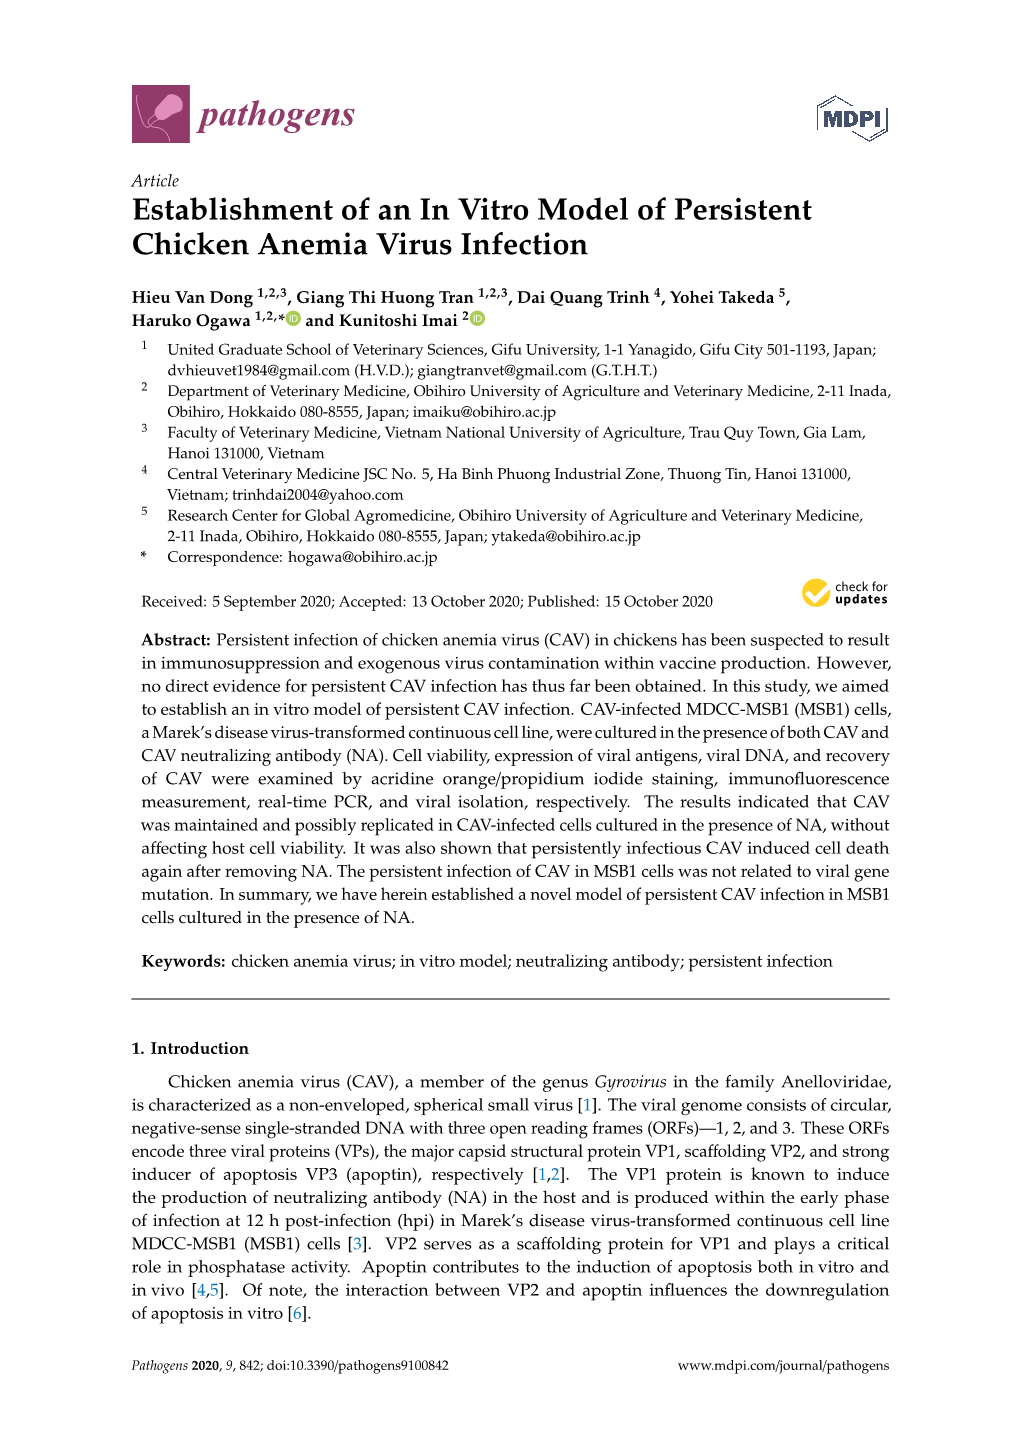 Establishment of an in Vitro Model of Persistent Chicken Anemia Virus Infection